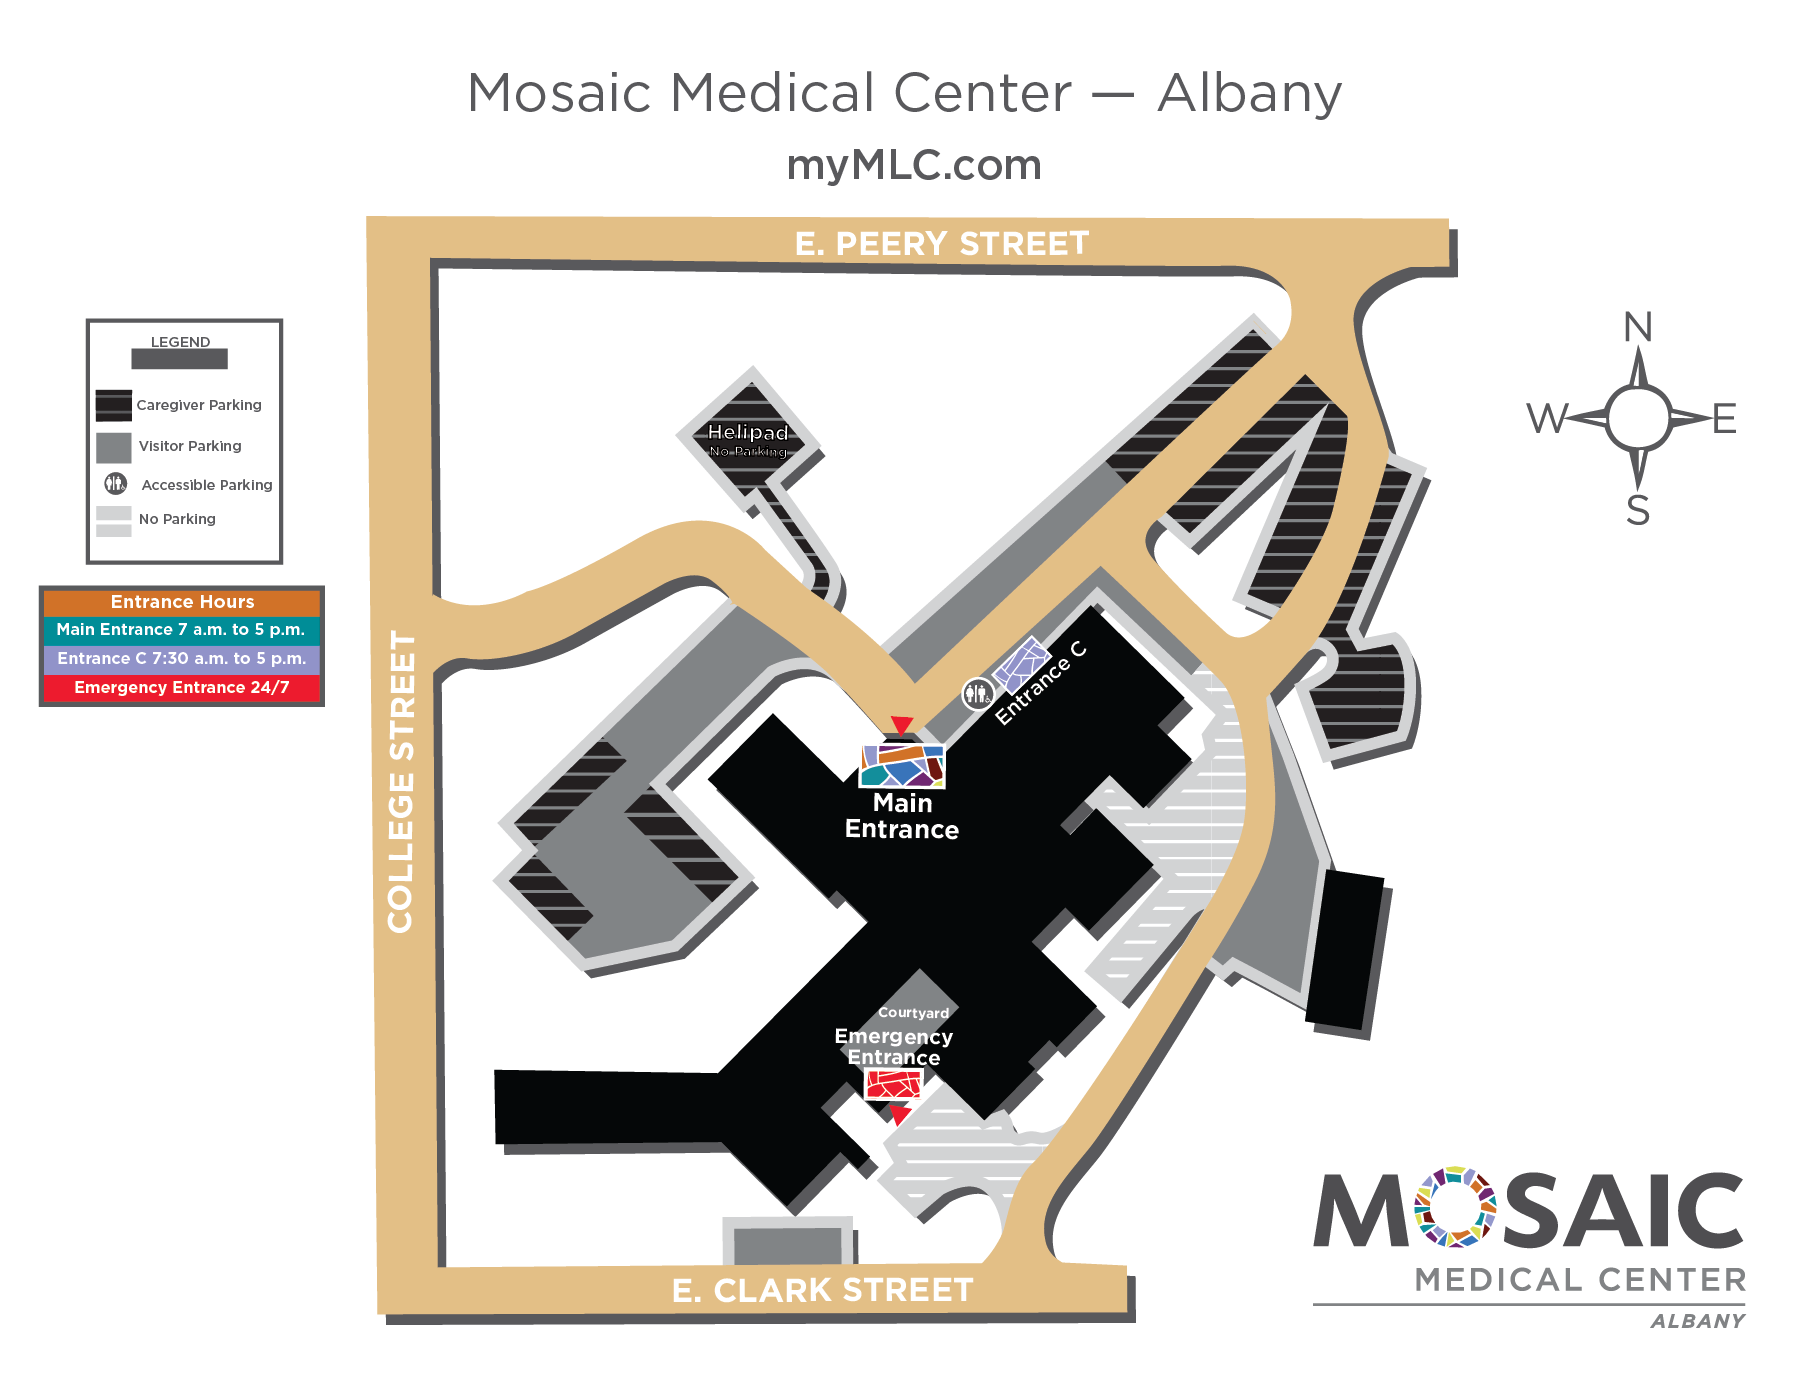 Mosaic Medical Center - Albany campus map